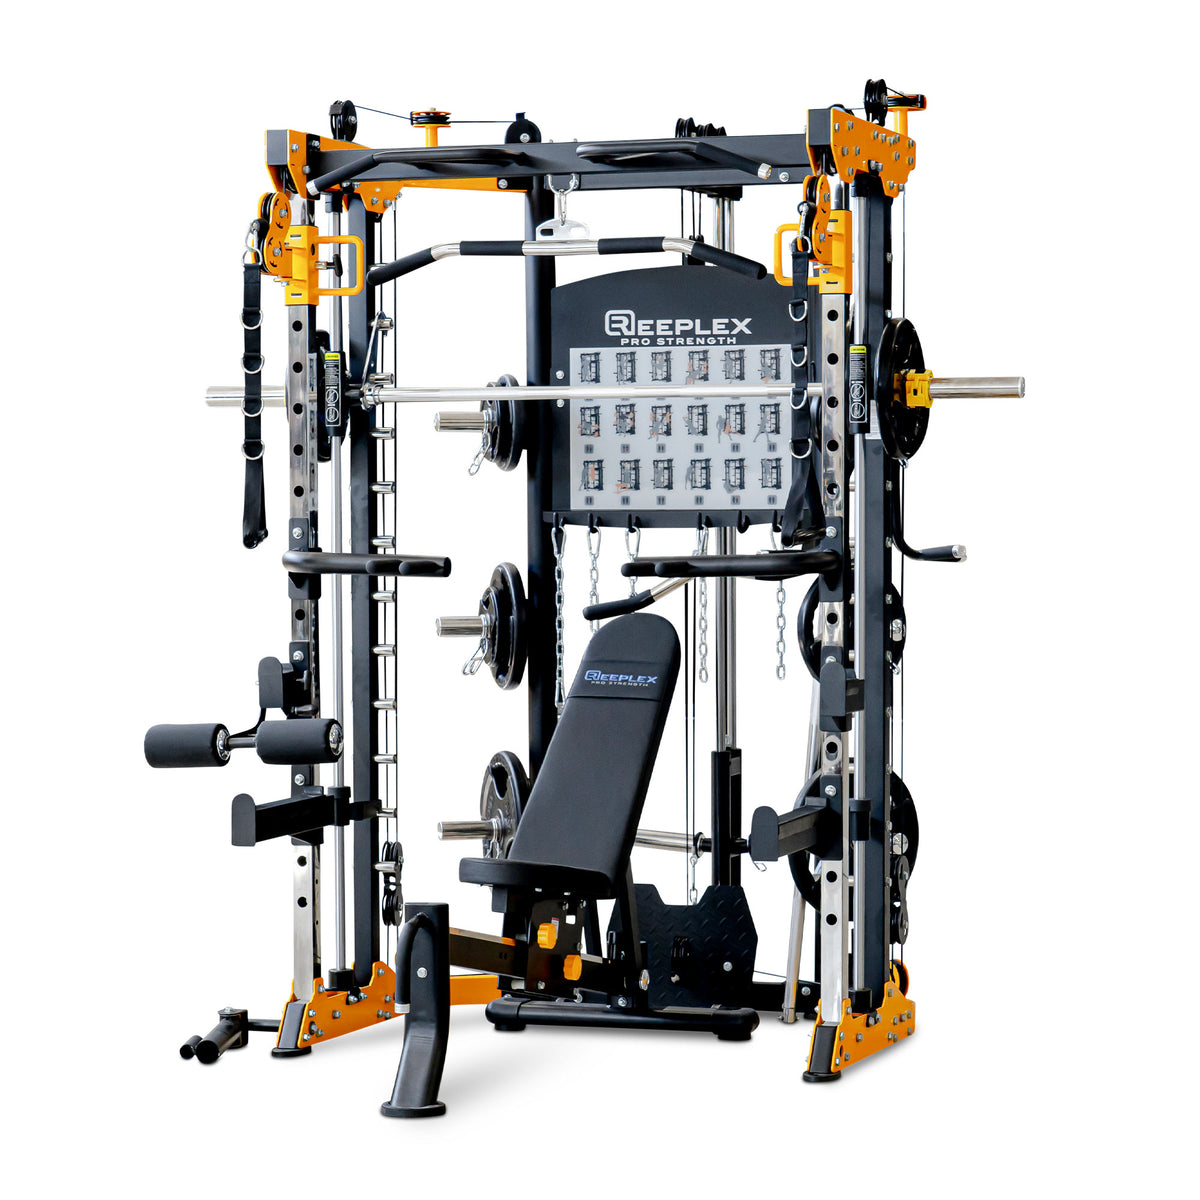 Reeplex CBT-PL Multi Station Gym + FID Bench + 100kg Weight Plates